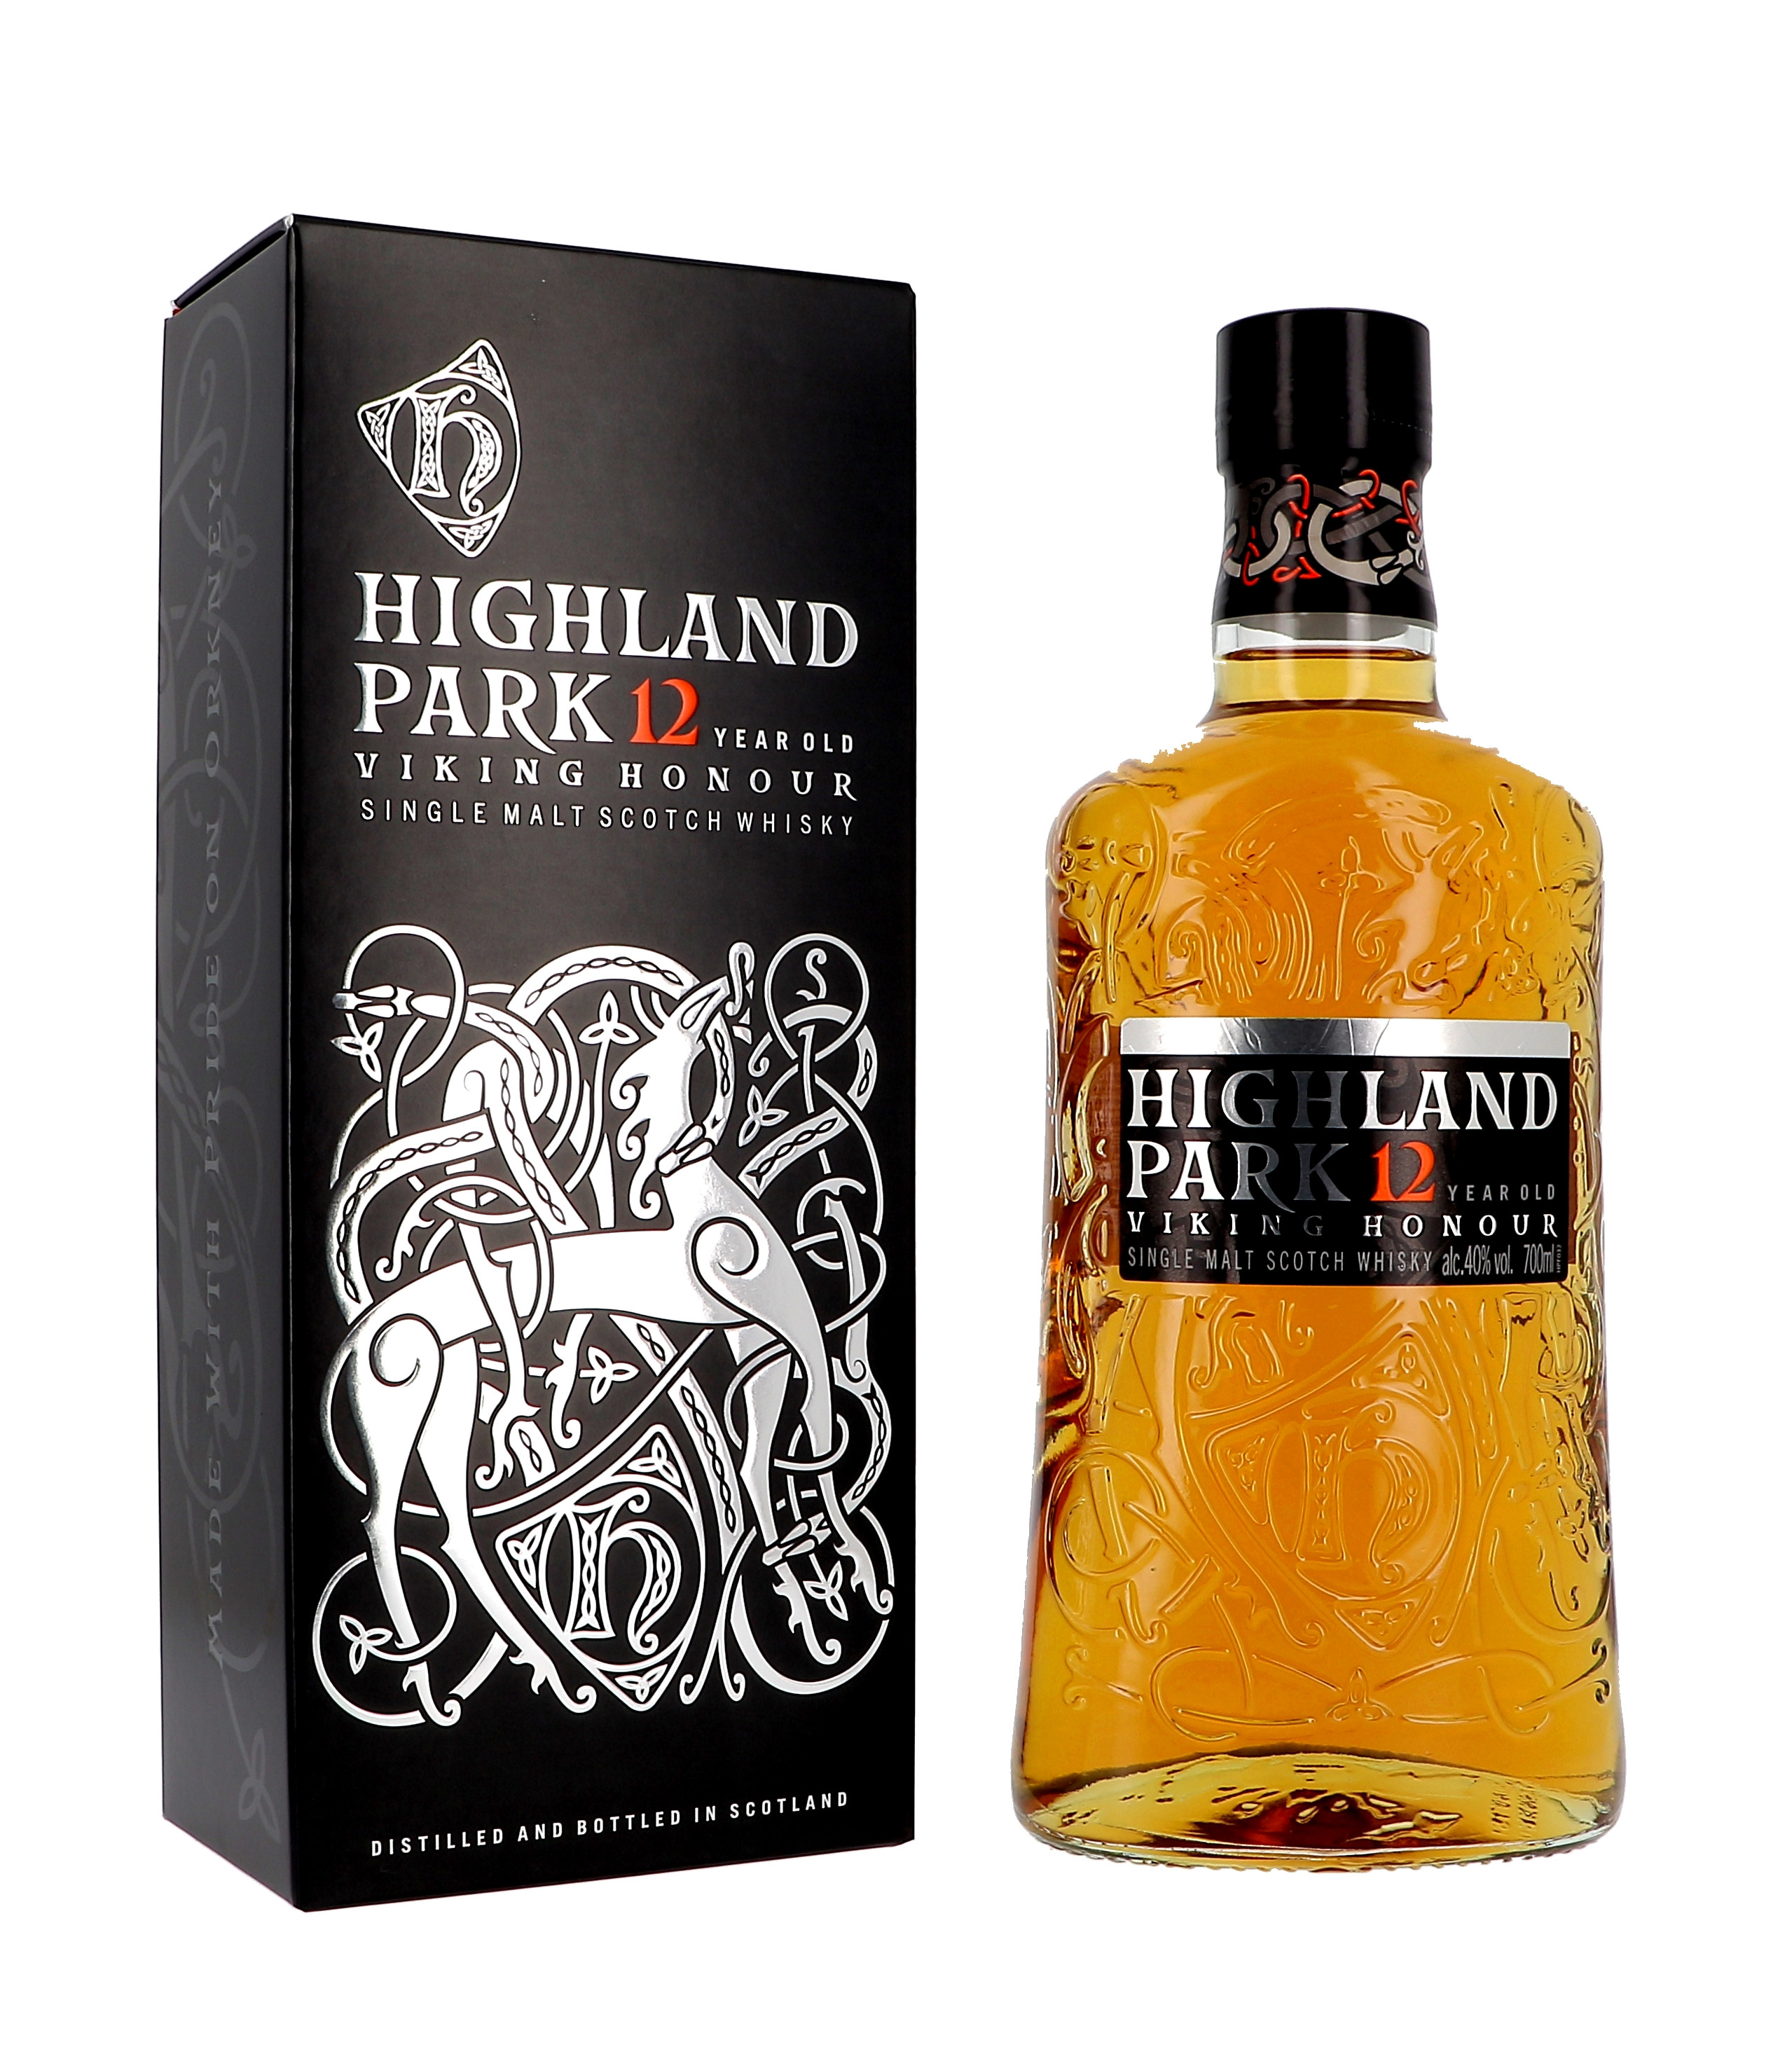 Highland Park 12 Ans d'Age Viking Honour 70cl 40% Orkney Islands